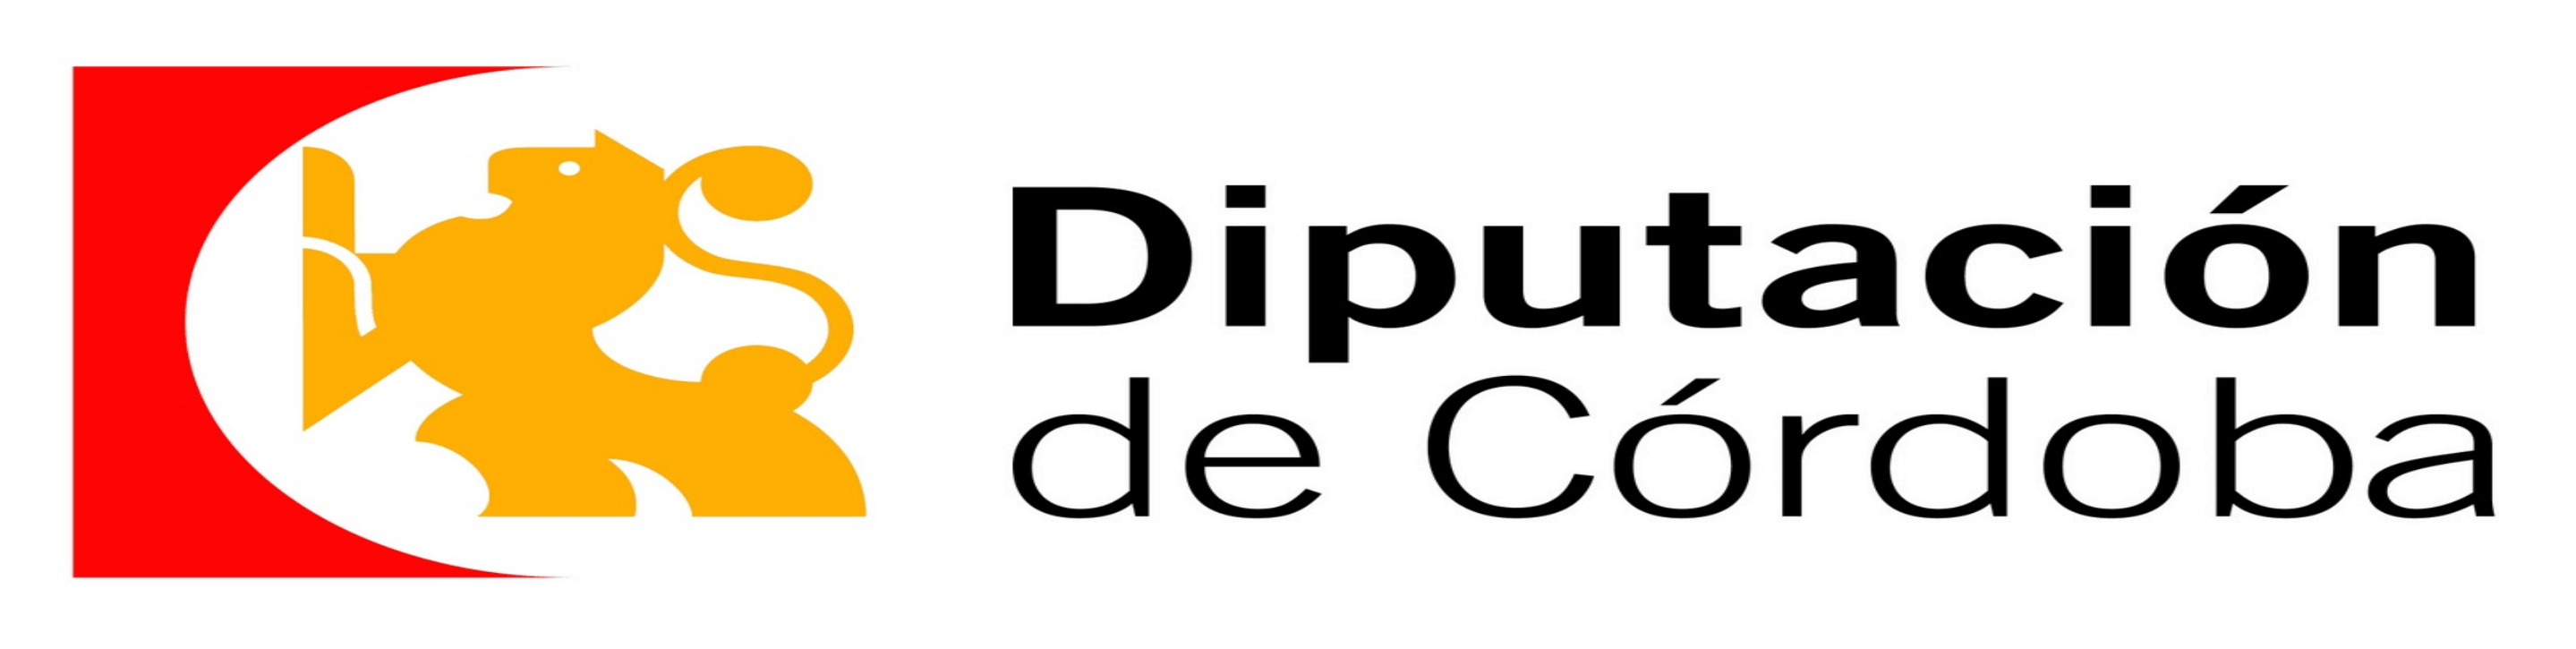 Logo y enlace a Diputación de Córdoba